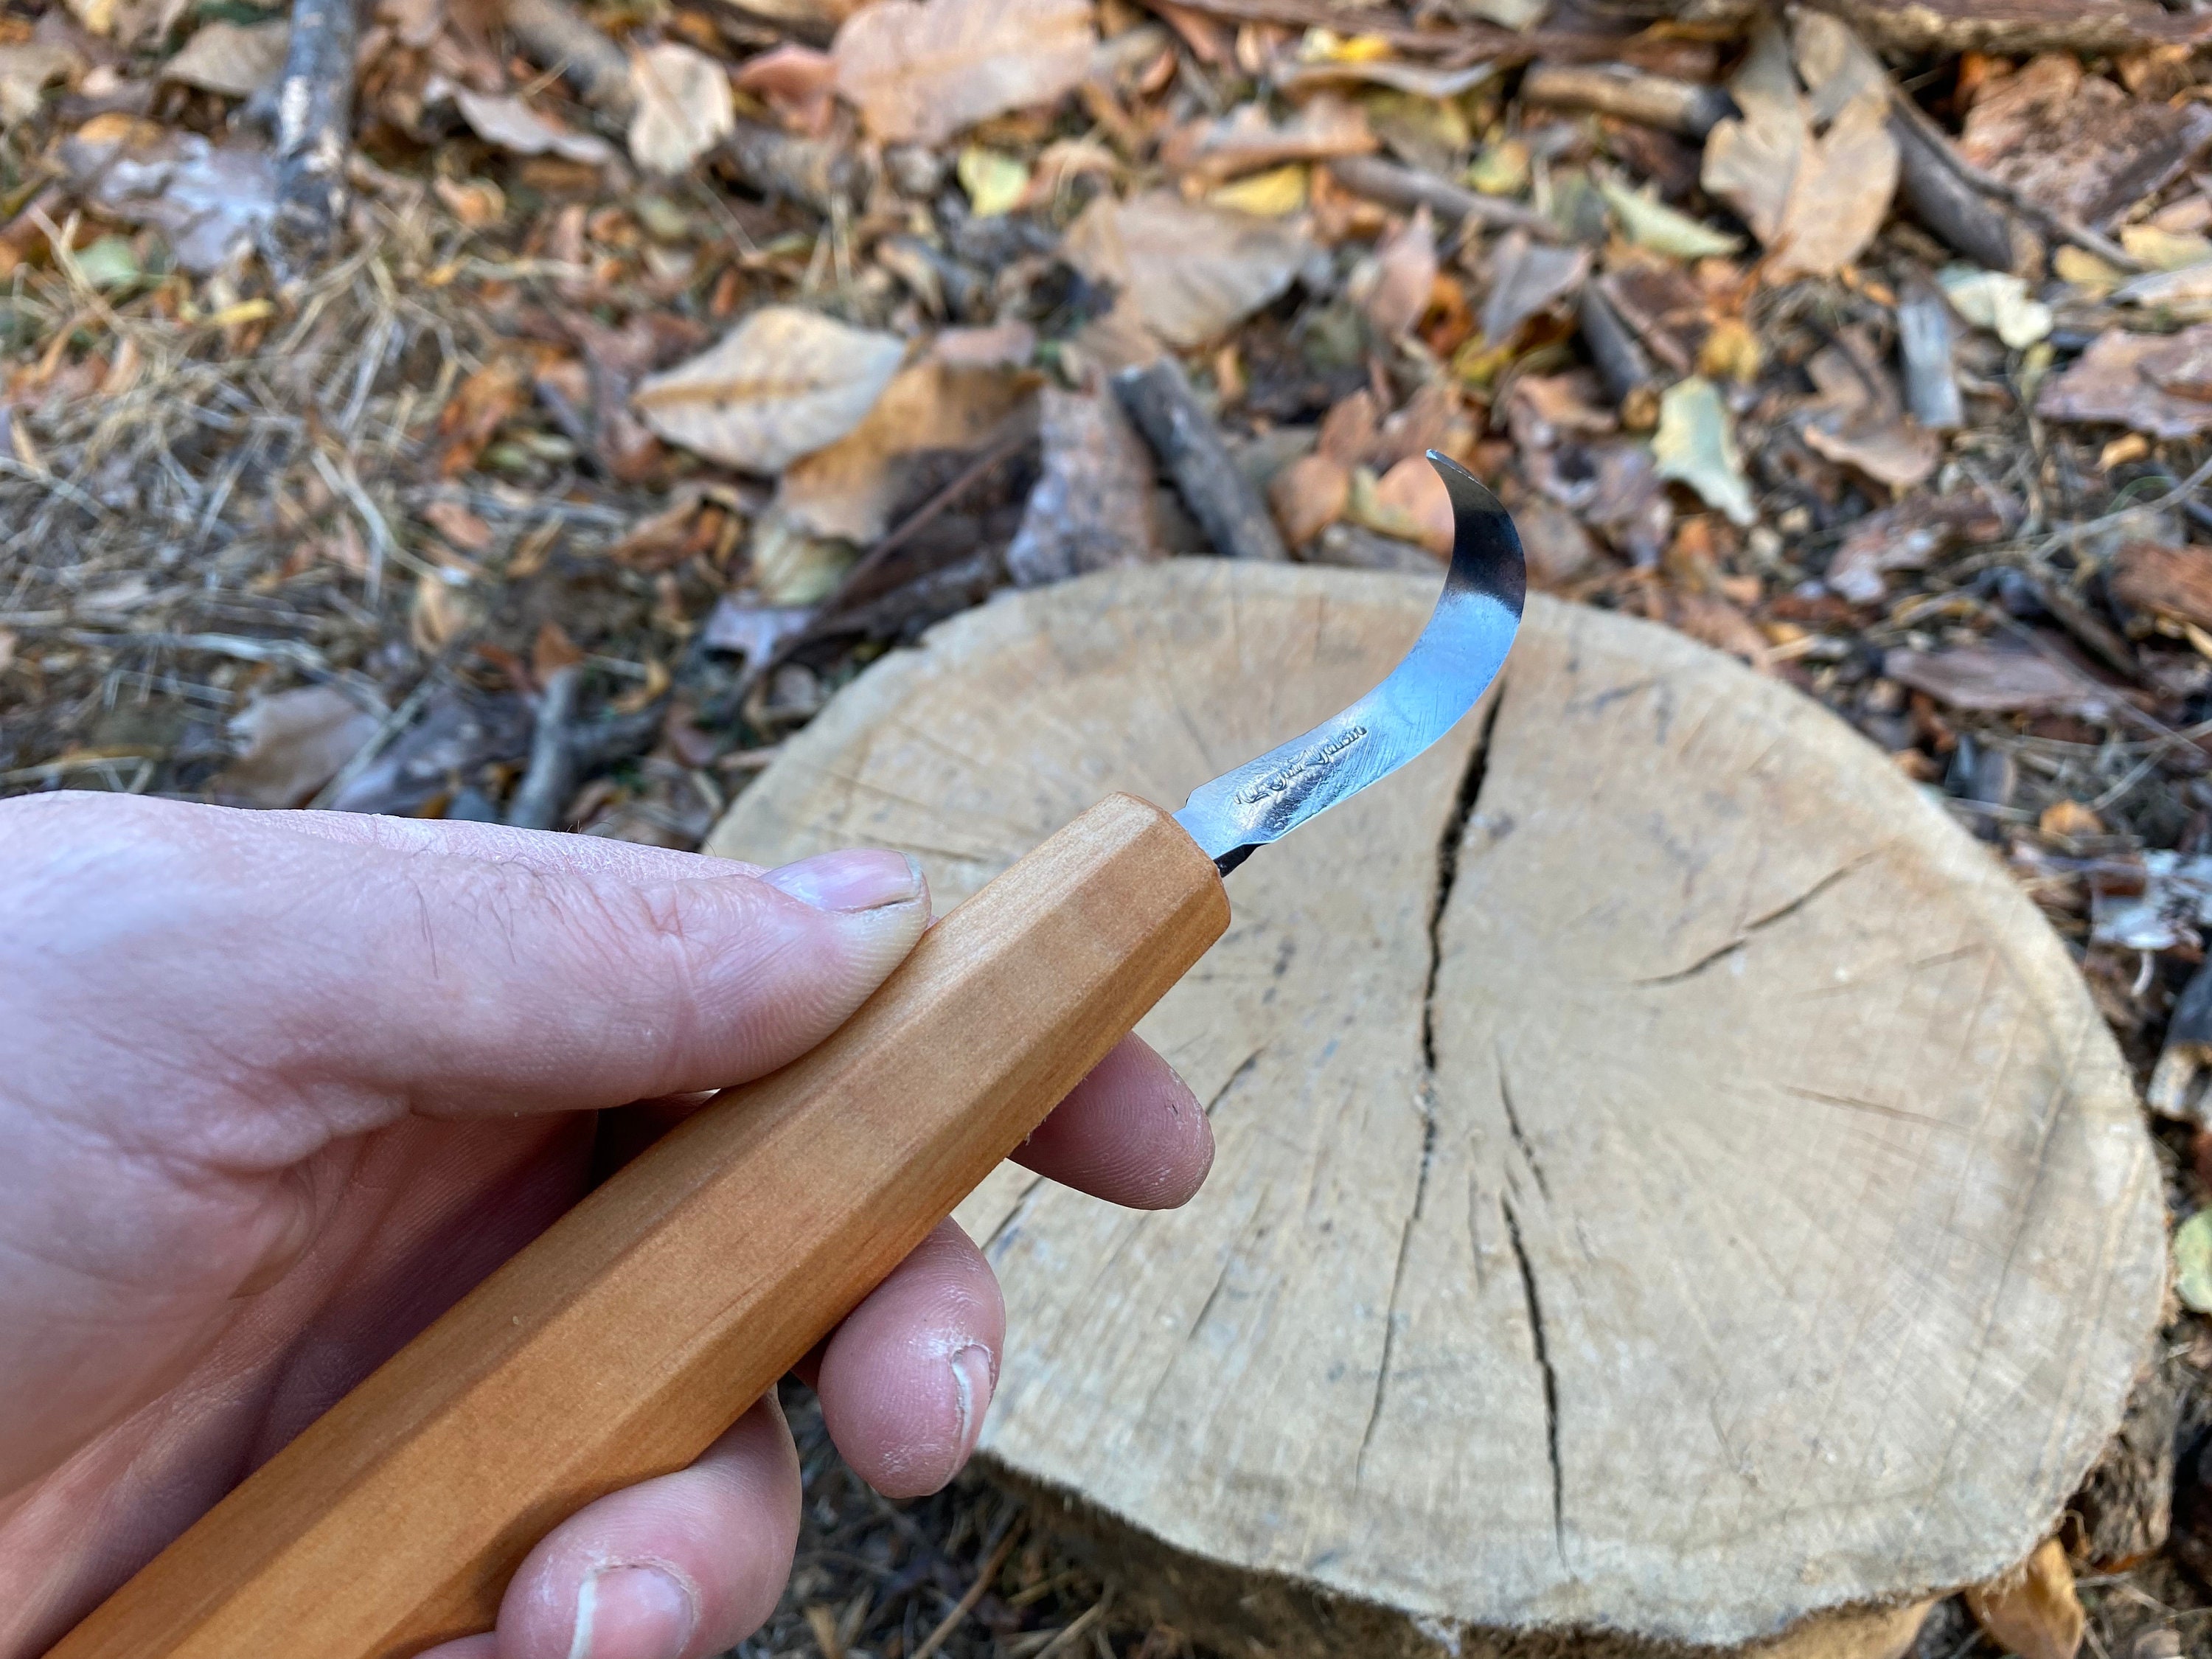 Spoon Knife Left Hand Open Curve, Hook Knife, Wood Carving Knife, Kuksa  Knife, Carving Tool 